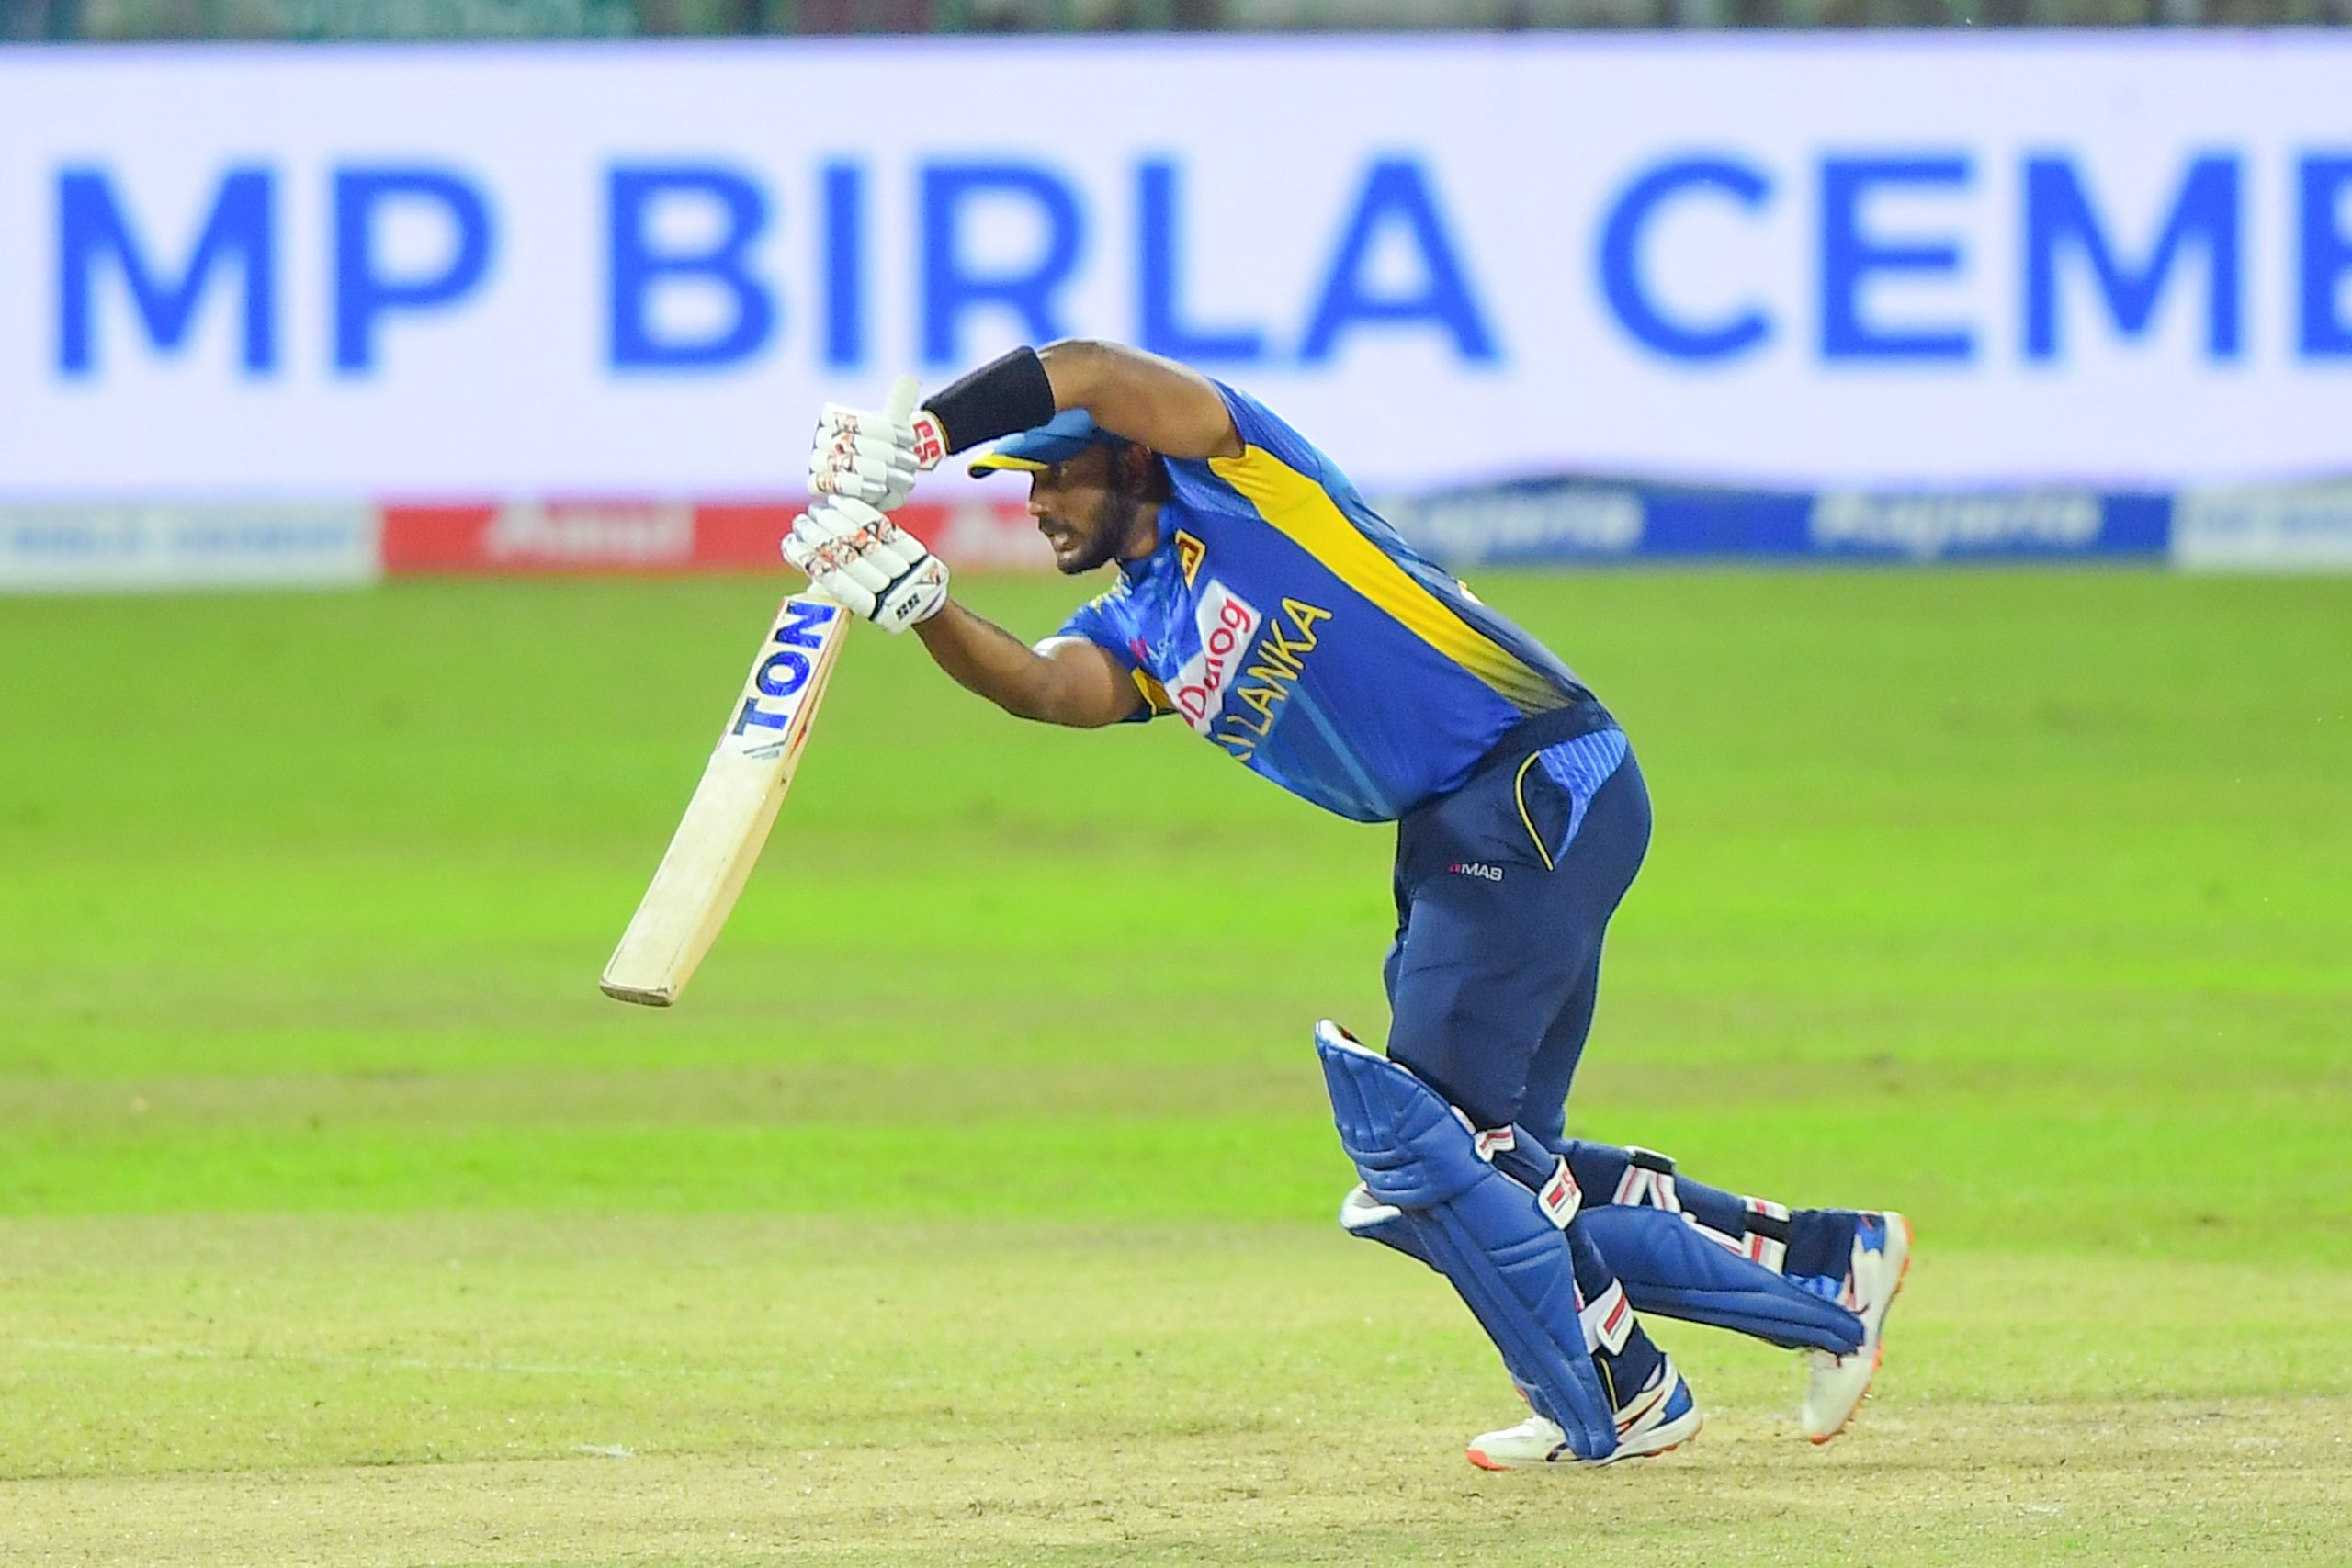 Sri Lanka beat Oman by 19 runs